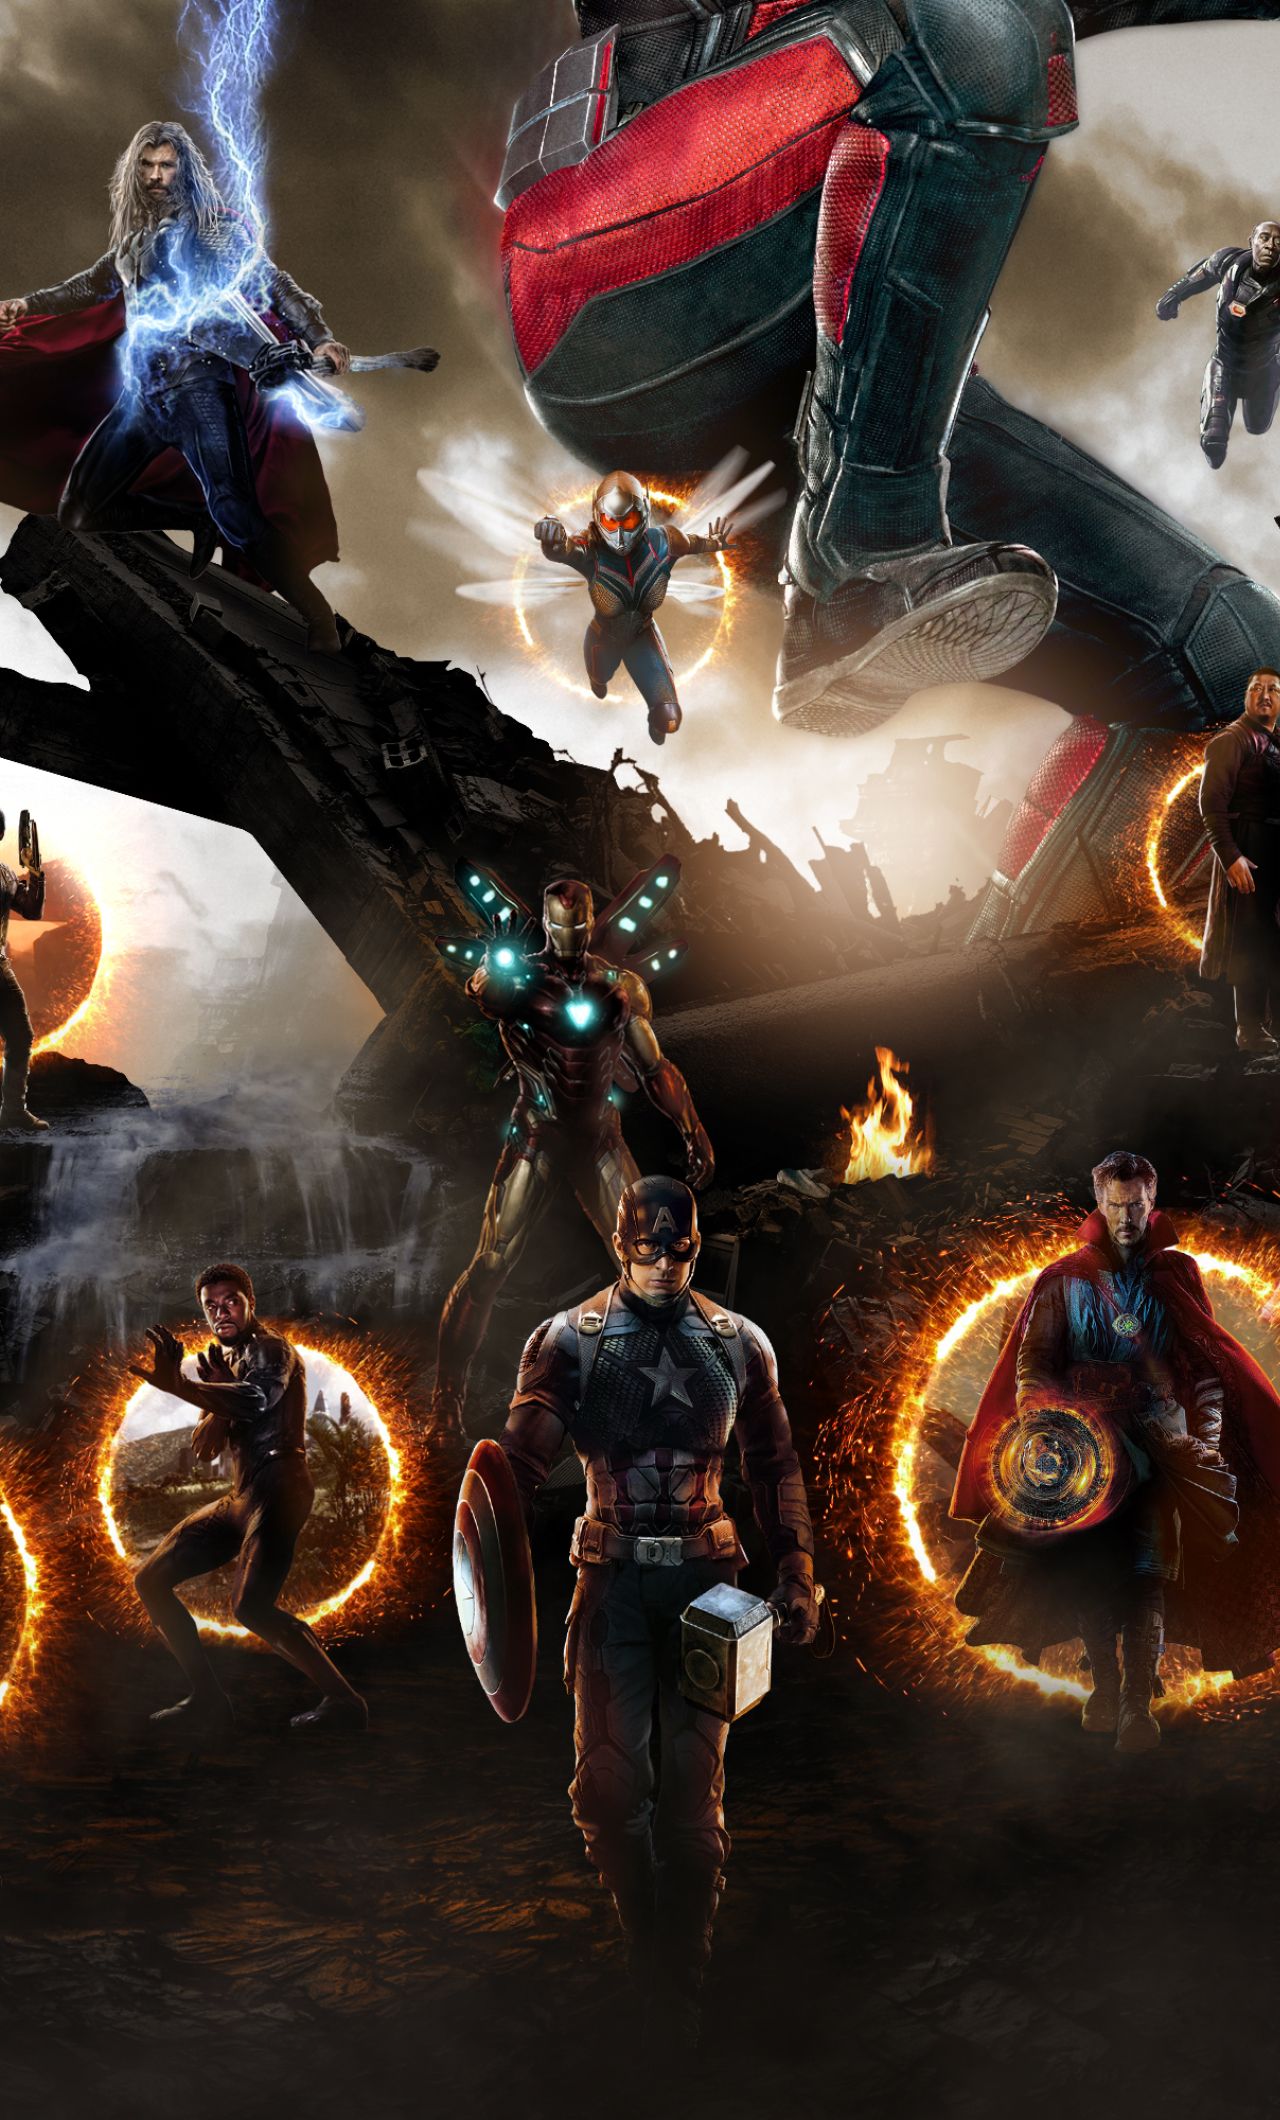 Avengers Endgame War Scene Fanart iPhone 6 plus Wallpaper, HD Movies 4K Wallpaper, Image, Photo and Background